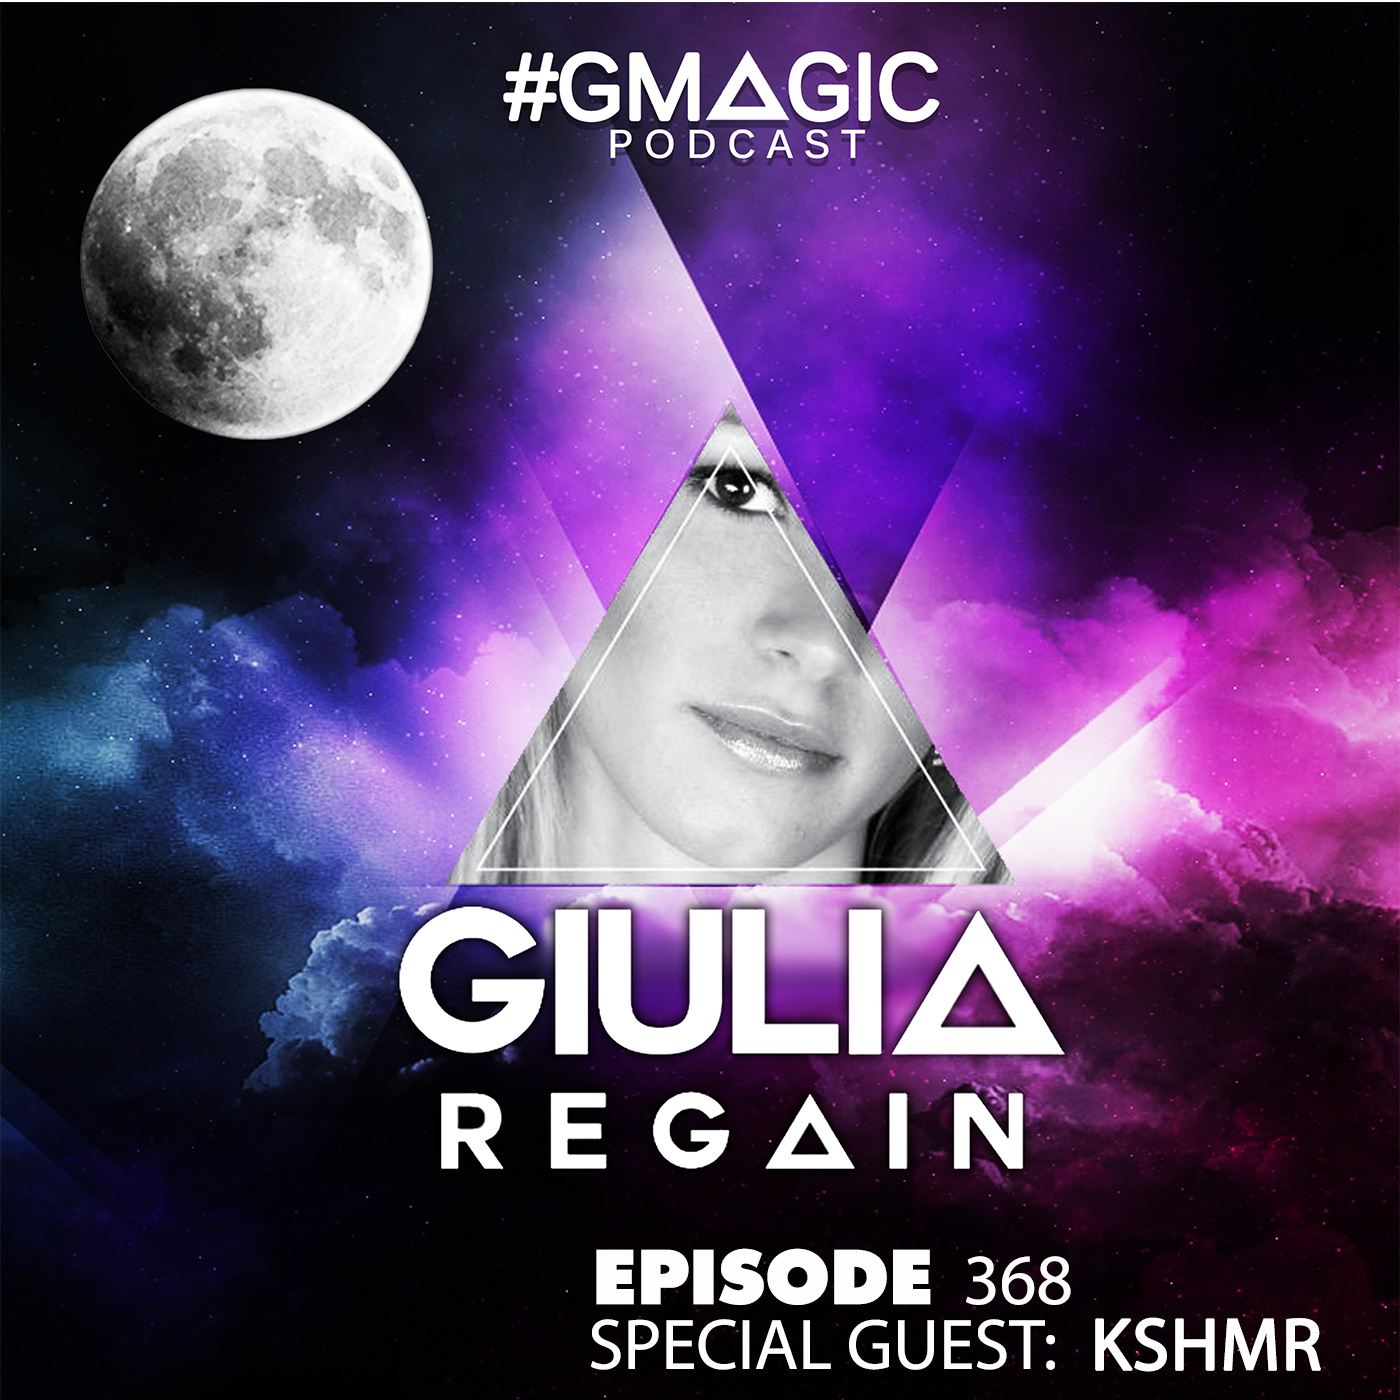 #Gmagic podcast 368 - Special Guest: KSHMR